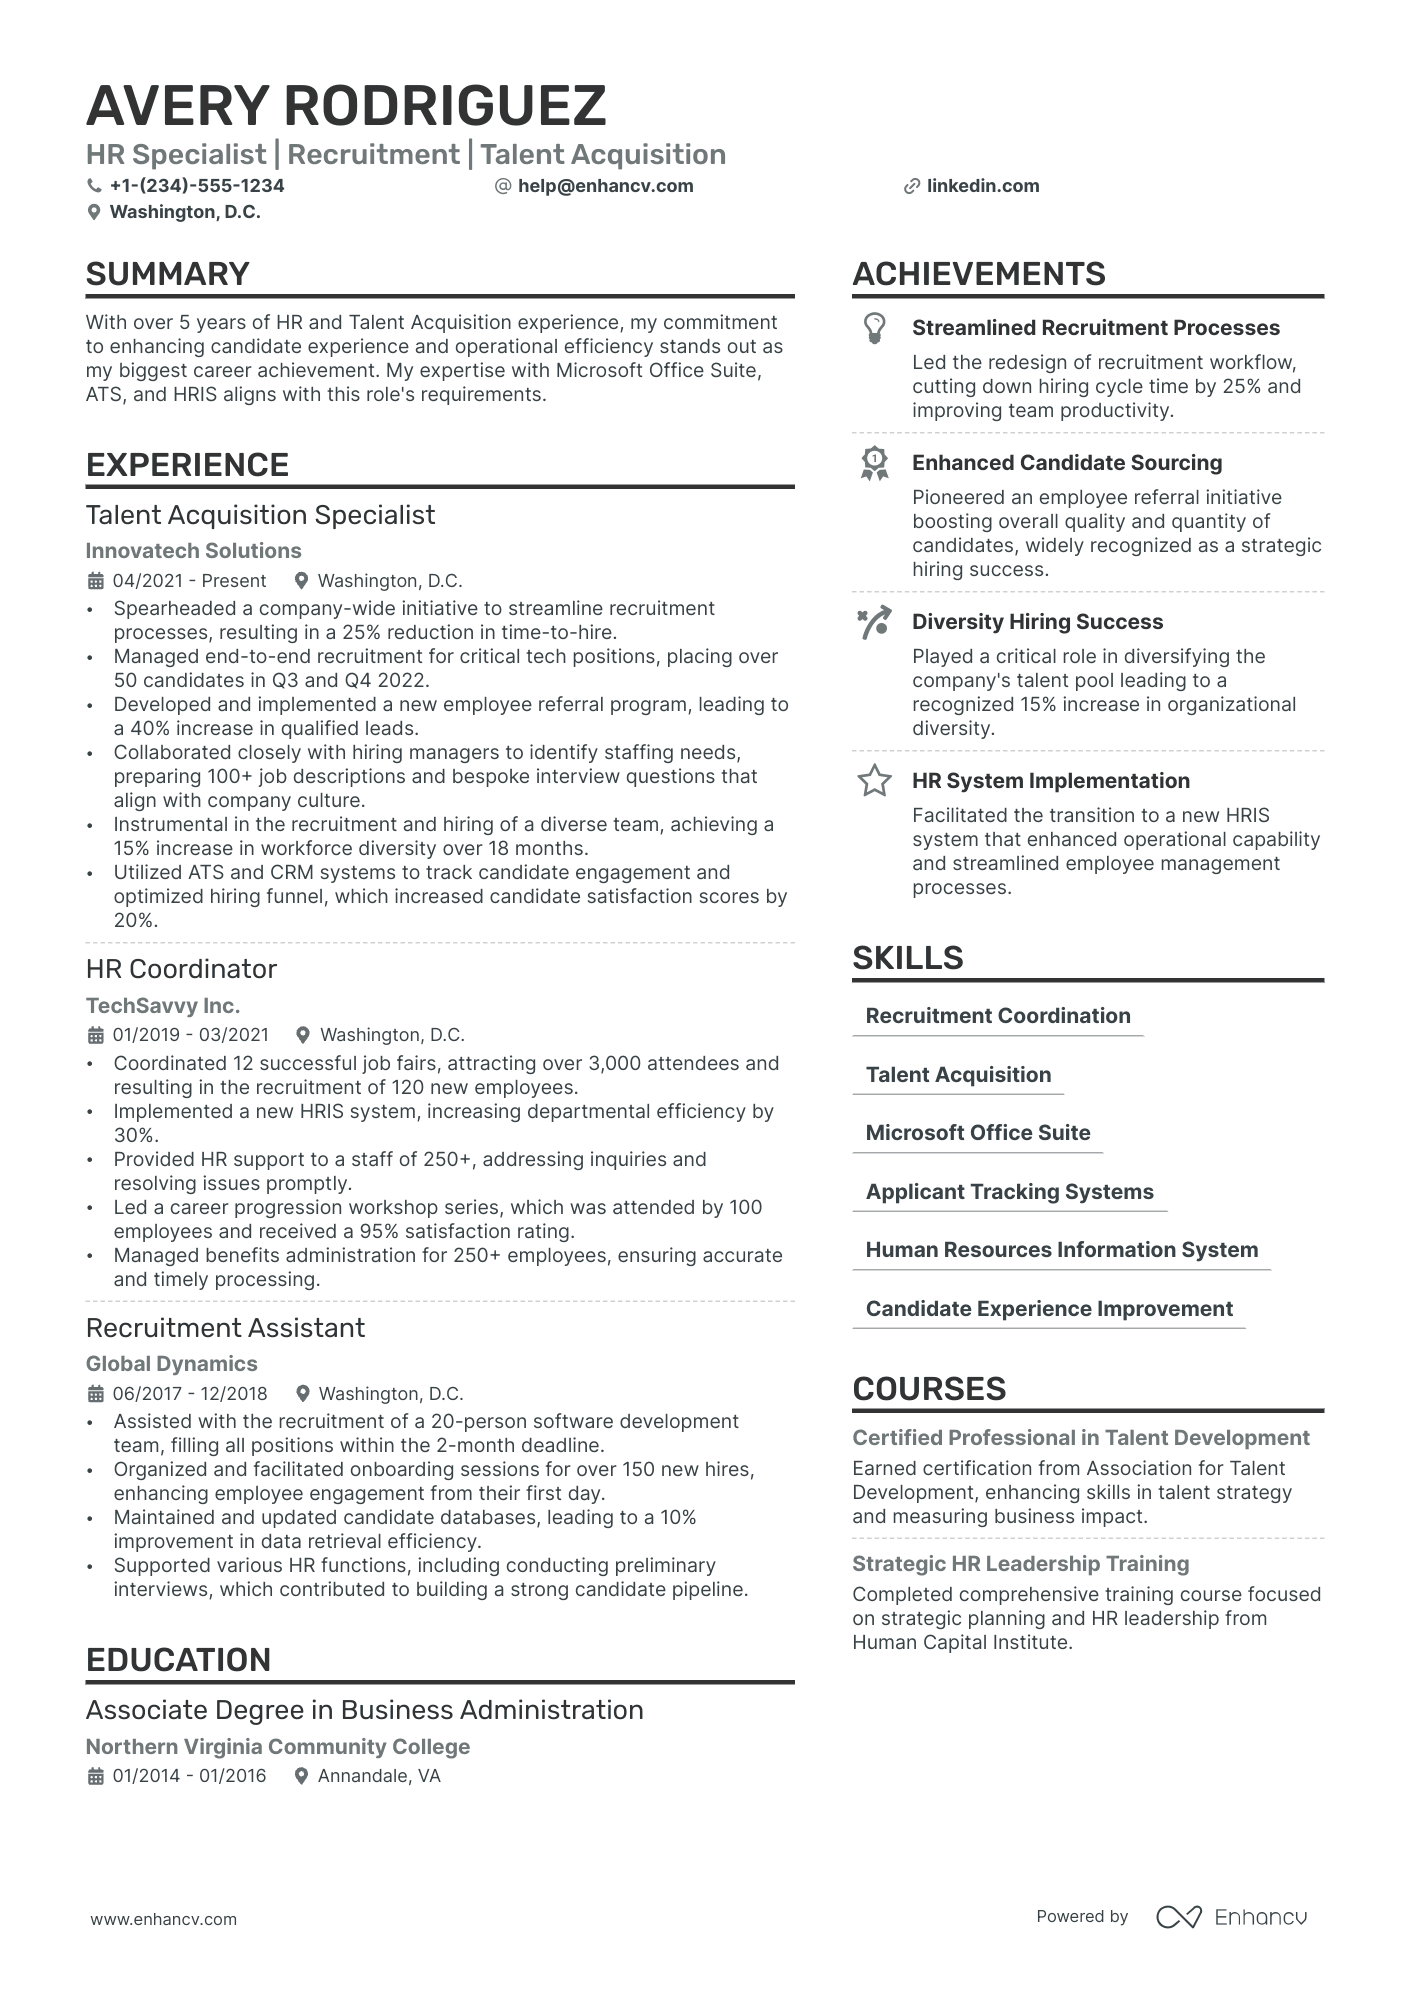 Recruiting Coordinator resume example